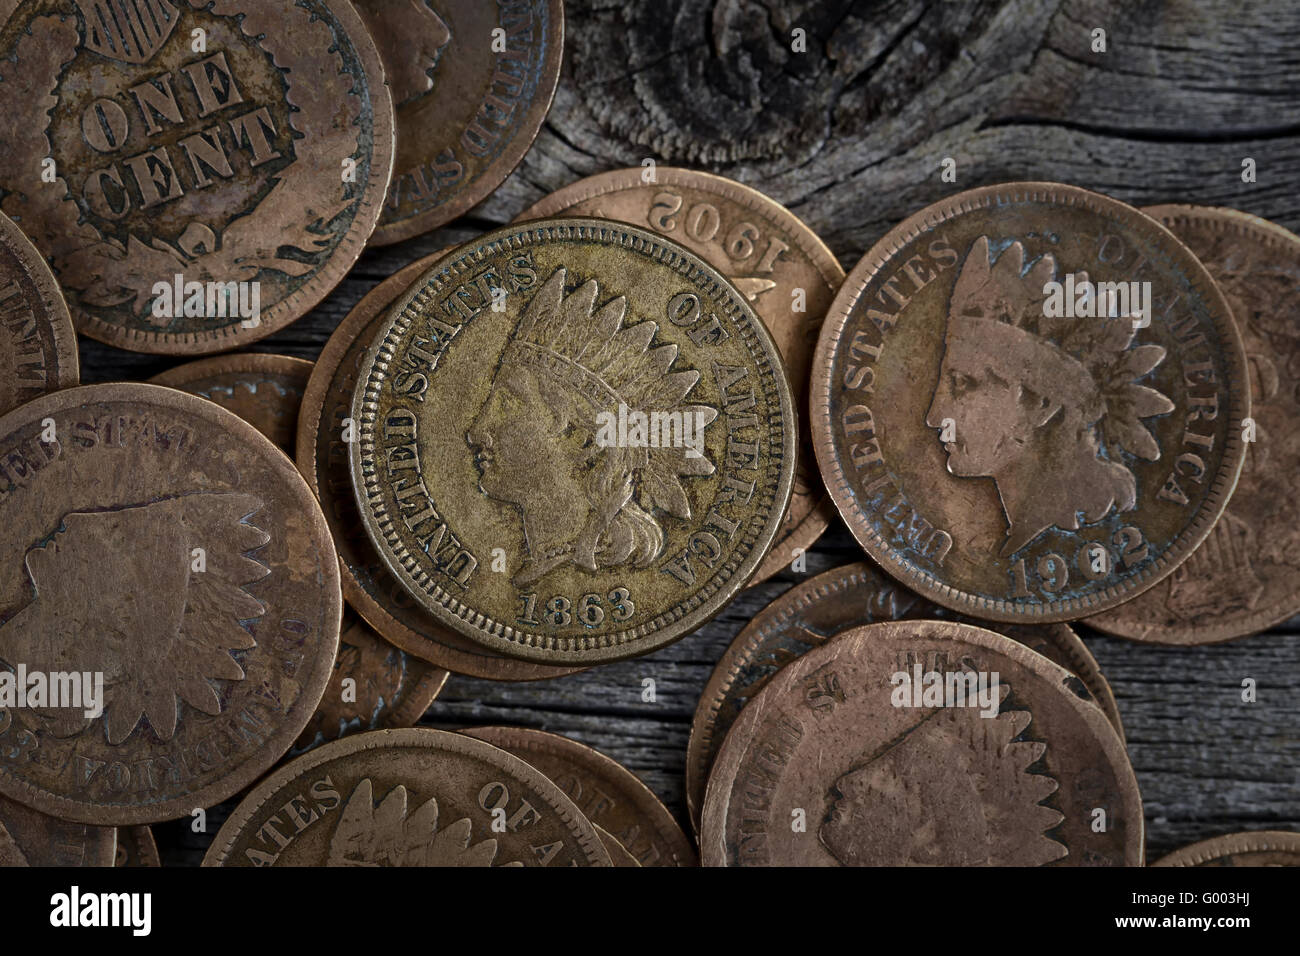 Raro centavo monedas en madera Foto de stock